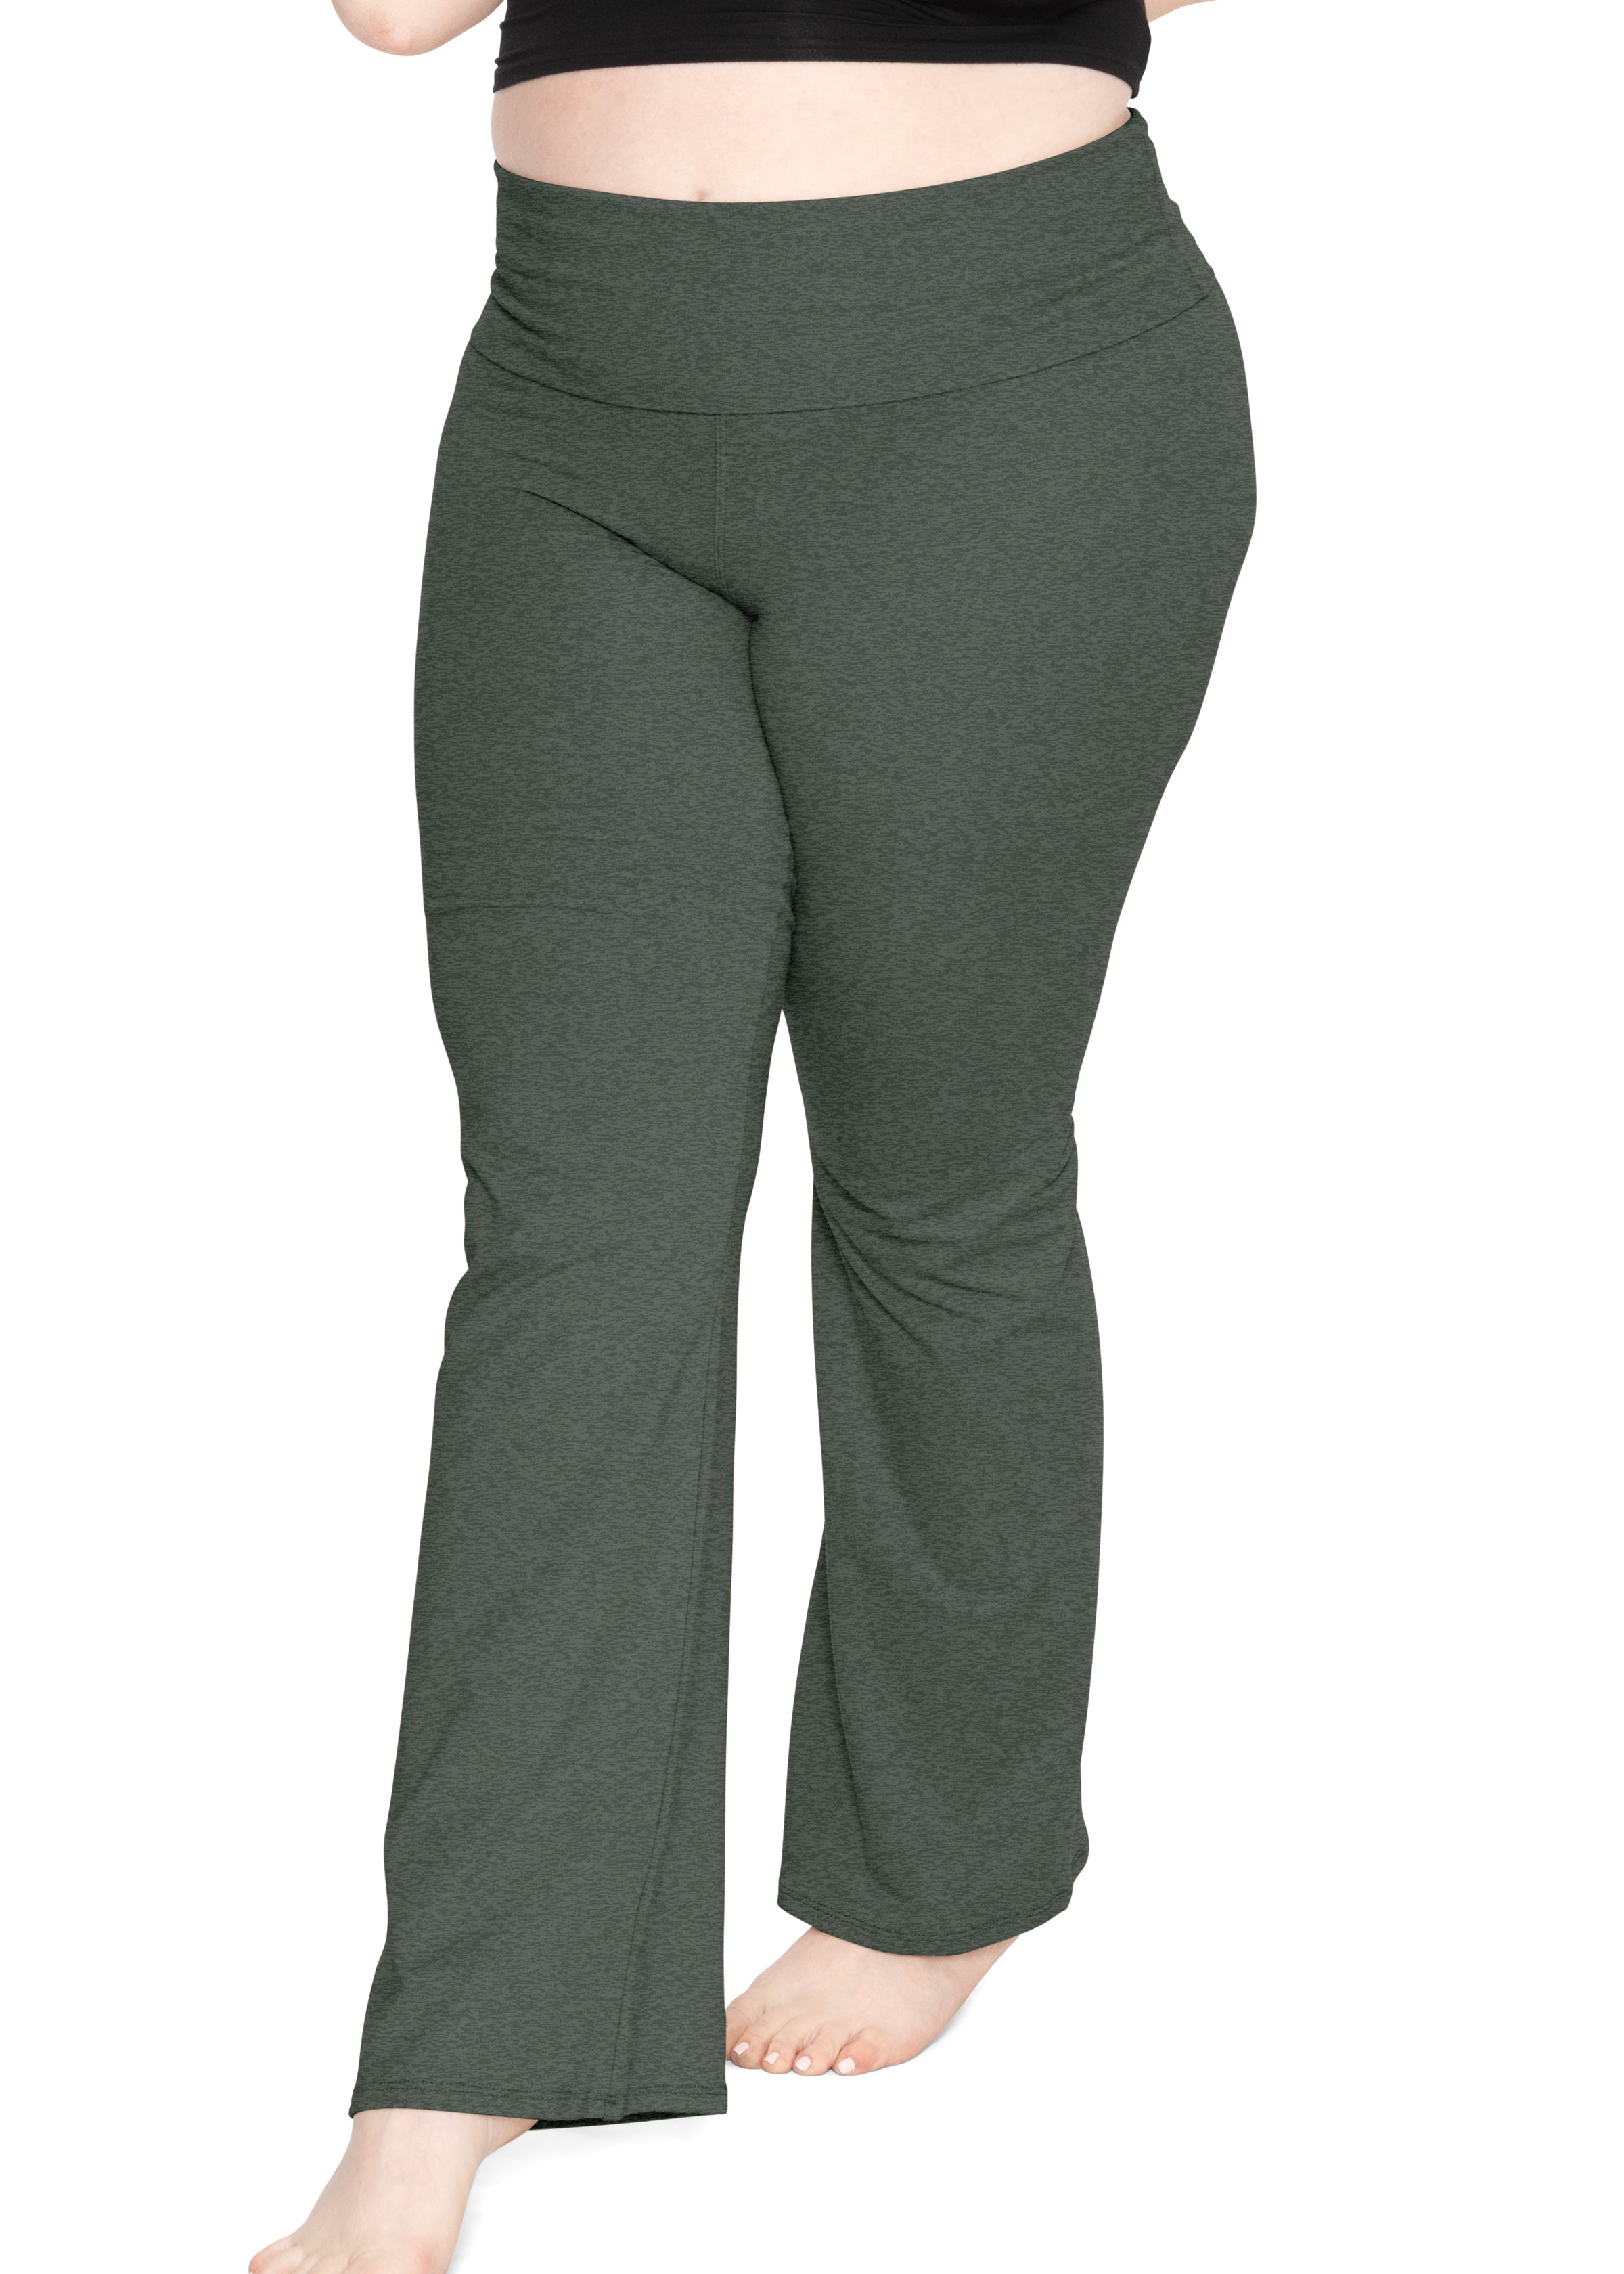 YUHAOTIN Yoga Pants for Women High Waist Women High Tight Pu Leather  Fashion Stitching Sports Run Fitness Yoga Pants Yoga Pants Plus Size Petite  Womens Yoga Pants Petite Length 